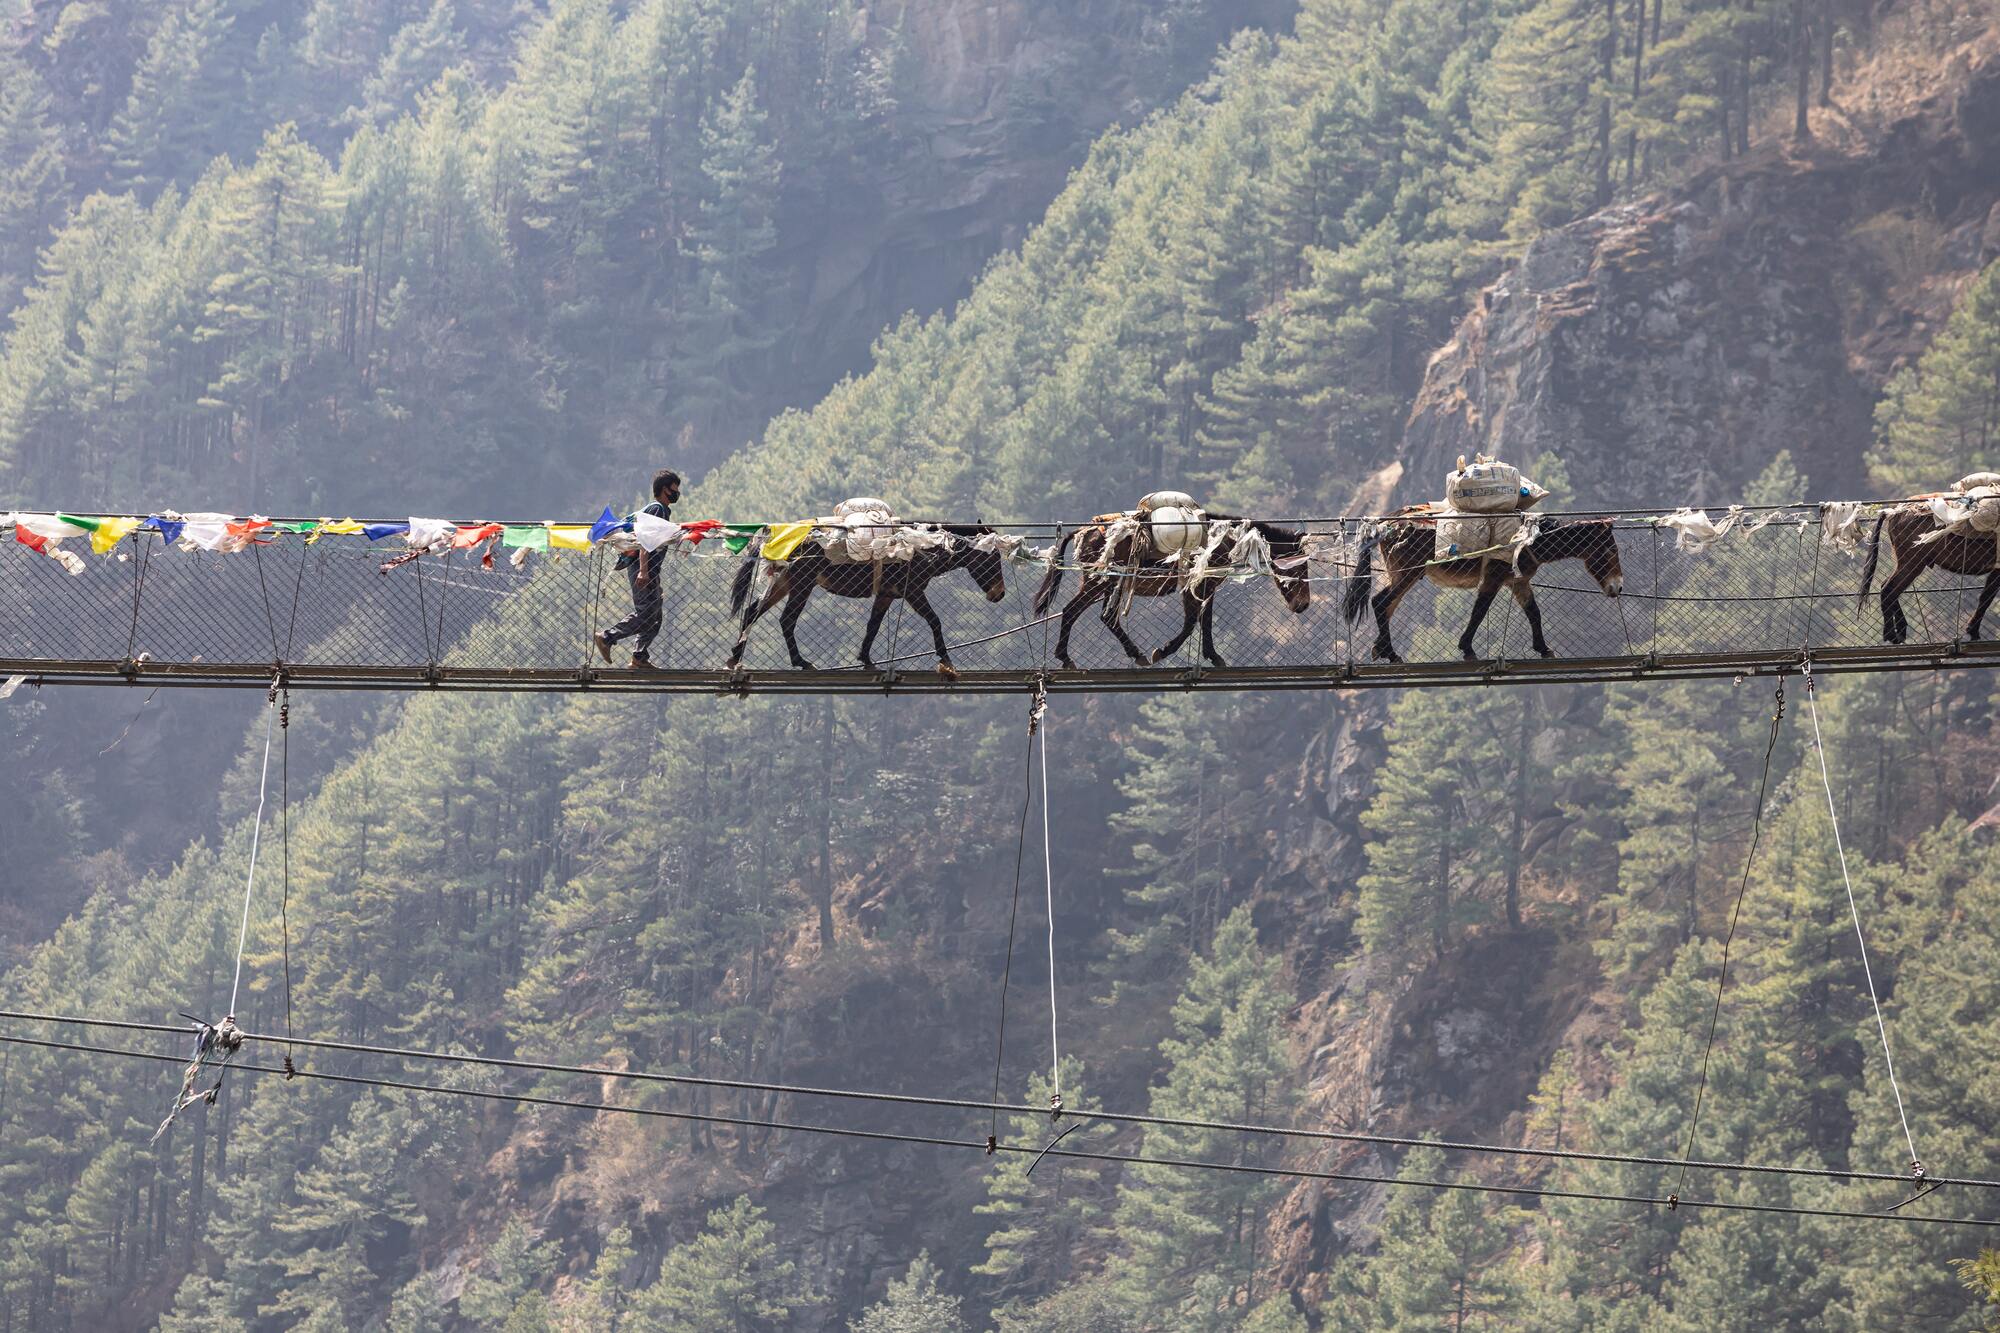 Suspsension bridges in Manaslu & Everest region - By Mountain People